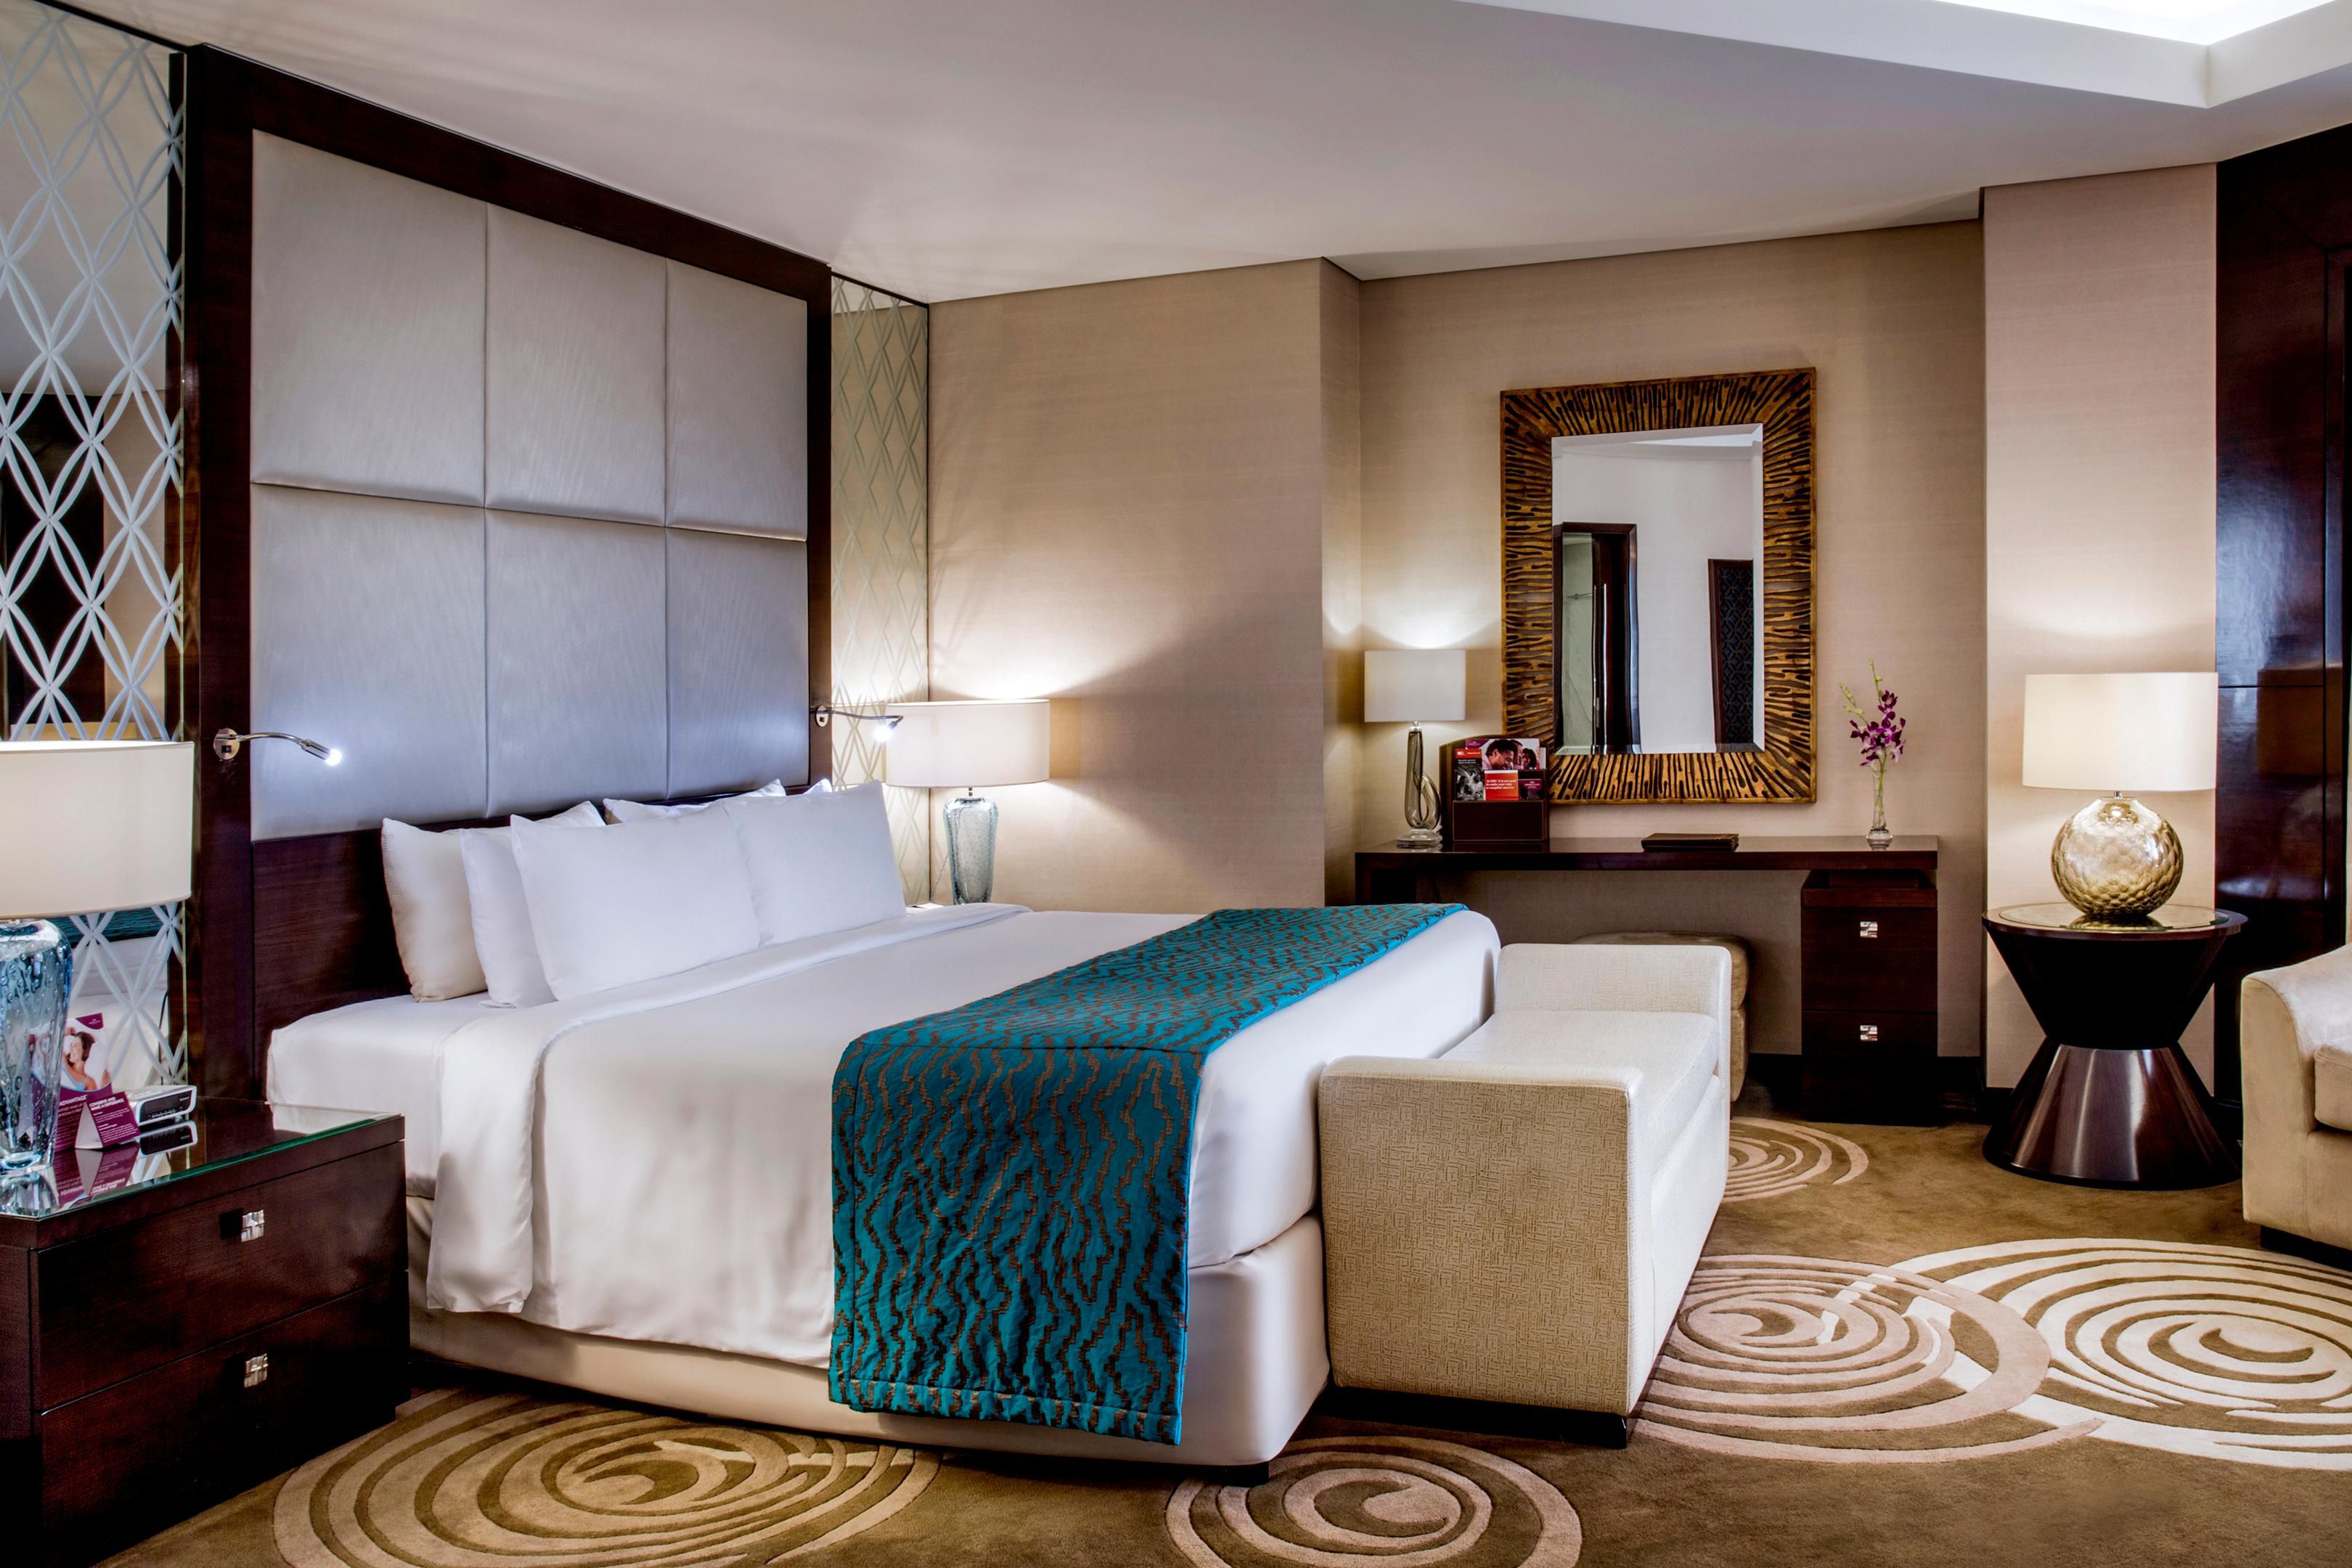 Crowne Plaza Dubai-Deira - 5 star hotel - ROYAL SUITE BEDROOM